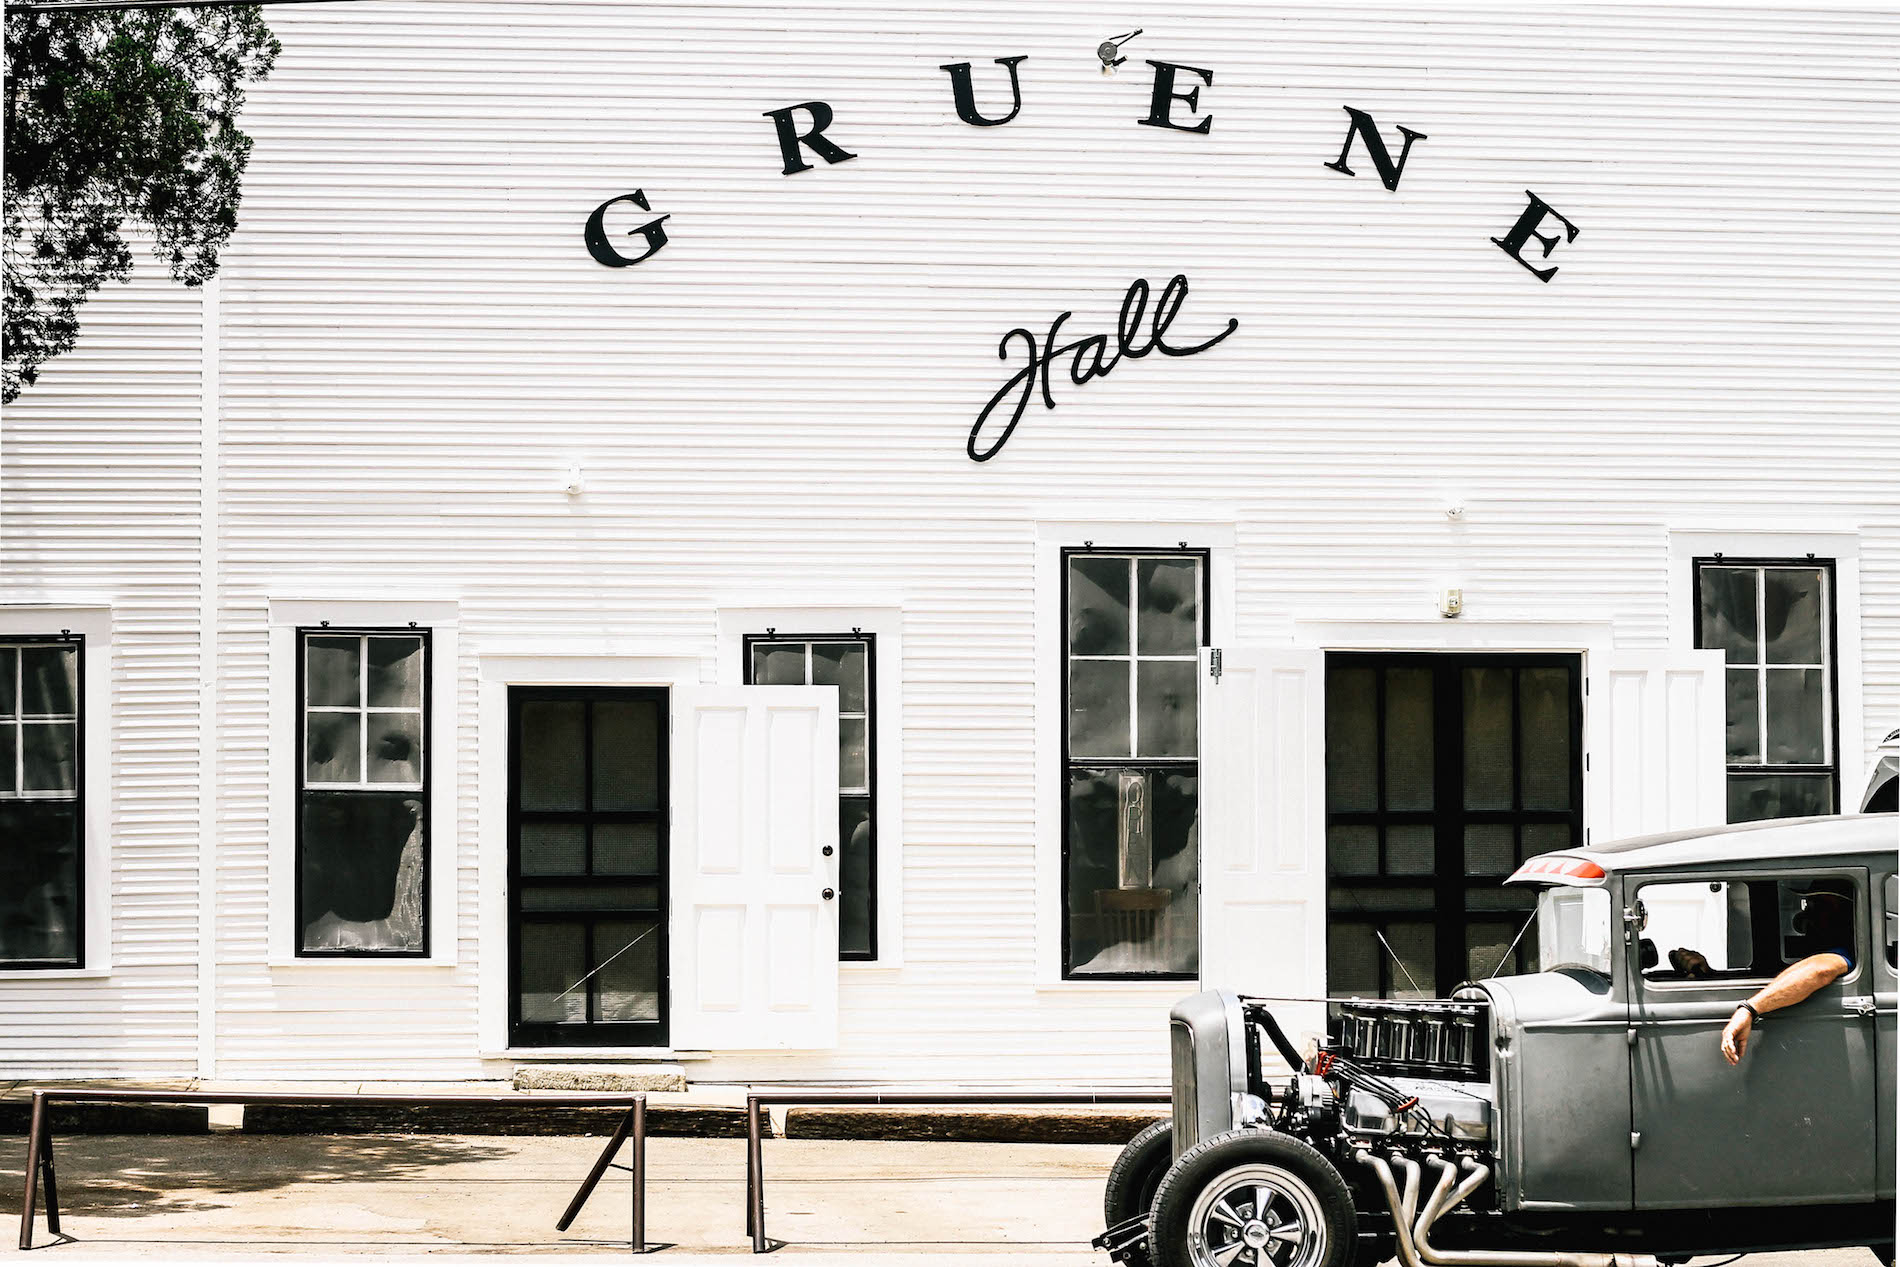 Gruene Texas Hill Country | The Coastal Confidence by Aubrey Yandow